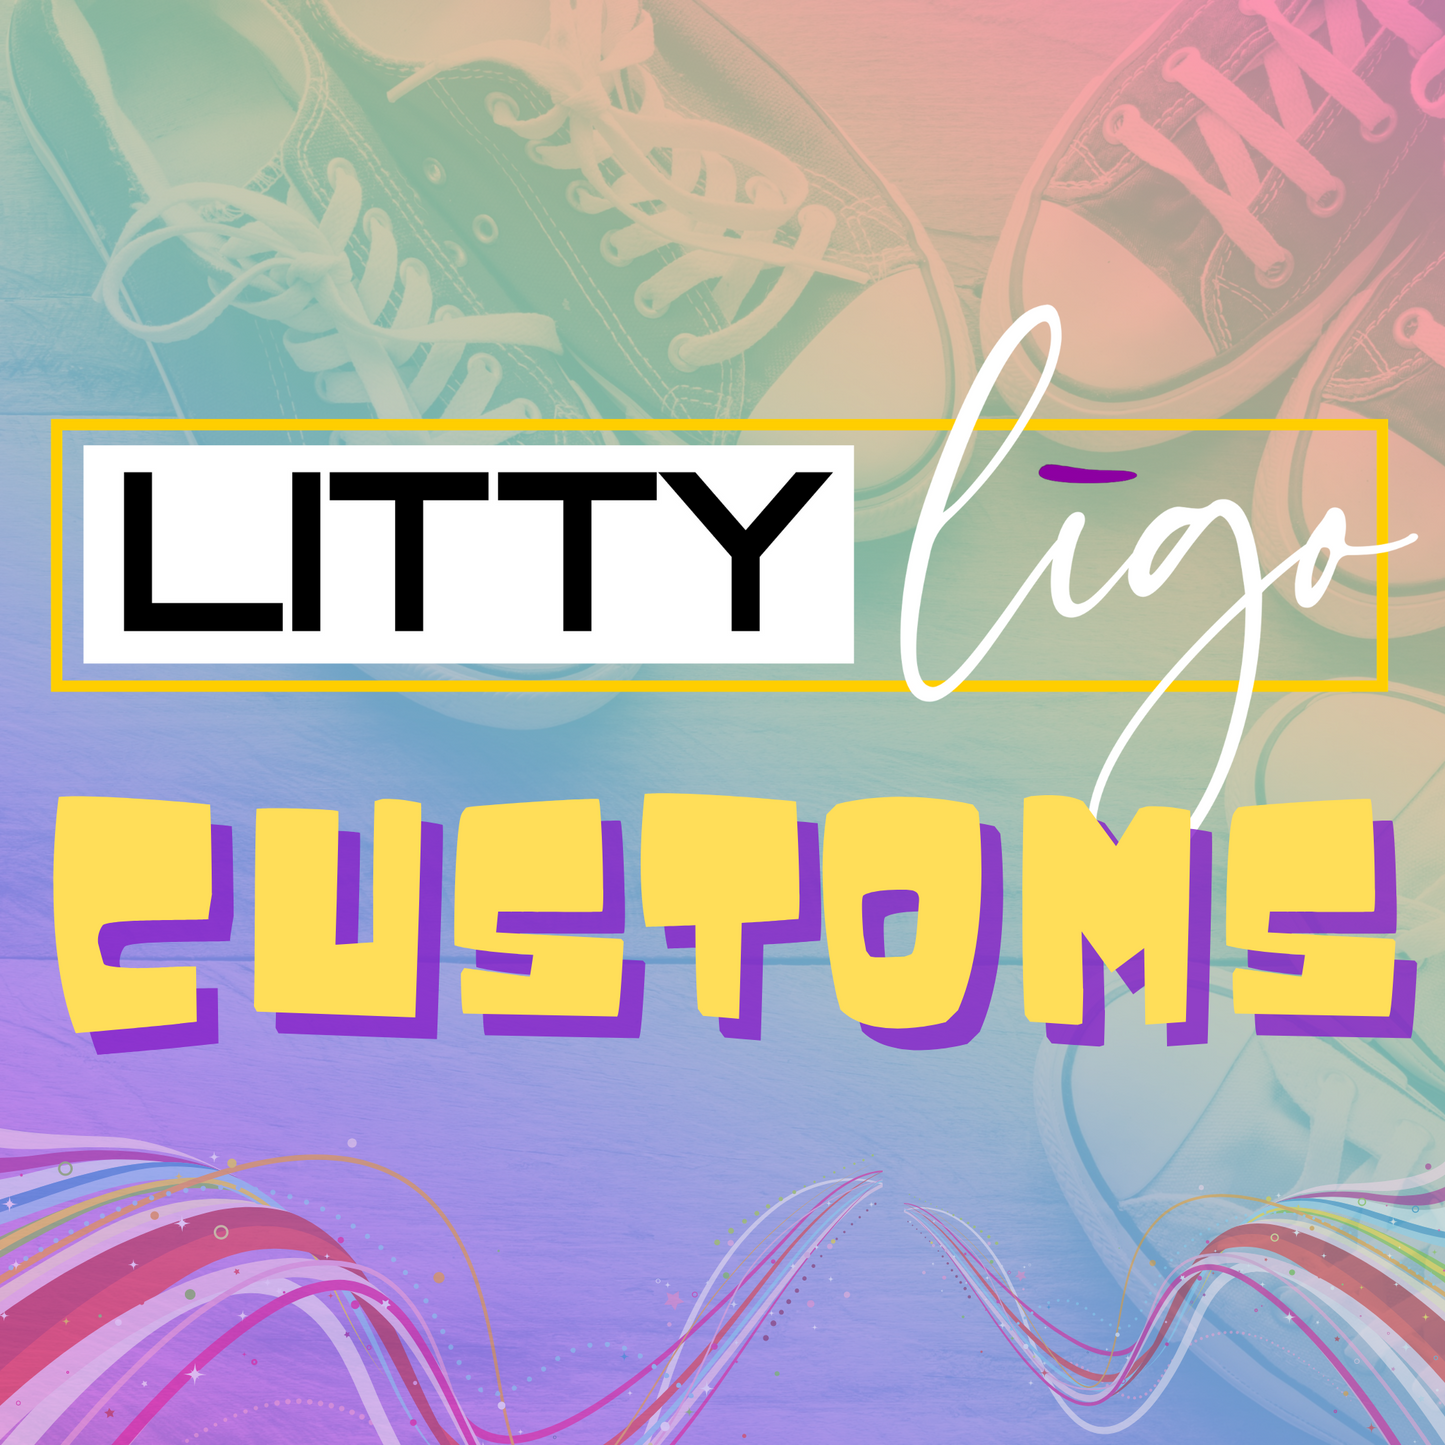 Litty Ligo Customs